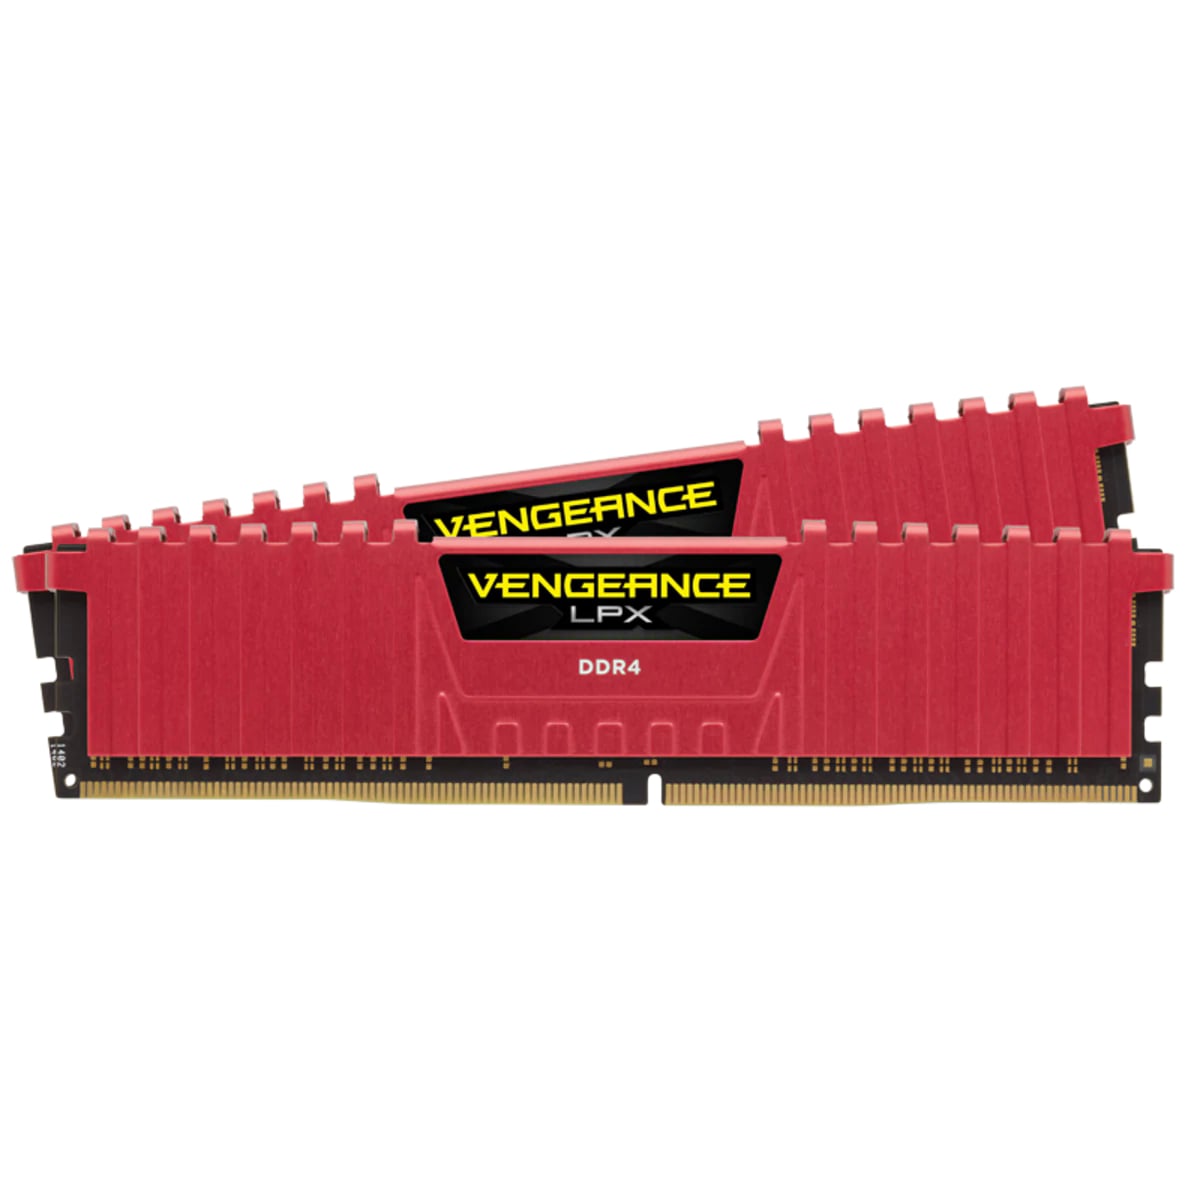 RAM CORSAIR VENGEANCE LPX 16GB (2x8GB) DDR4 2666MHz (RED) - CMK16GX4M2A2666C16R